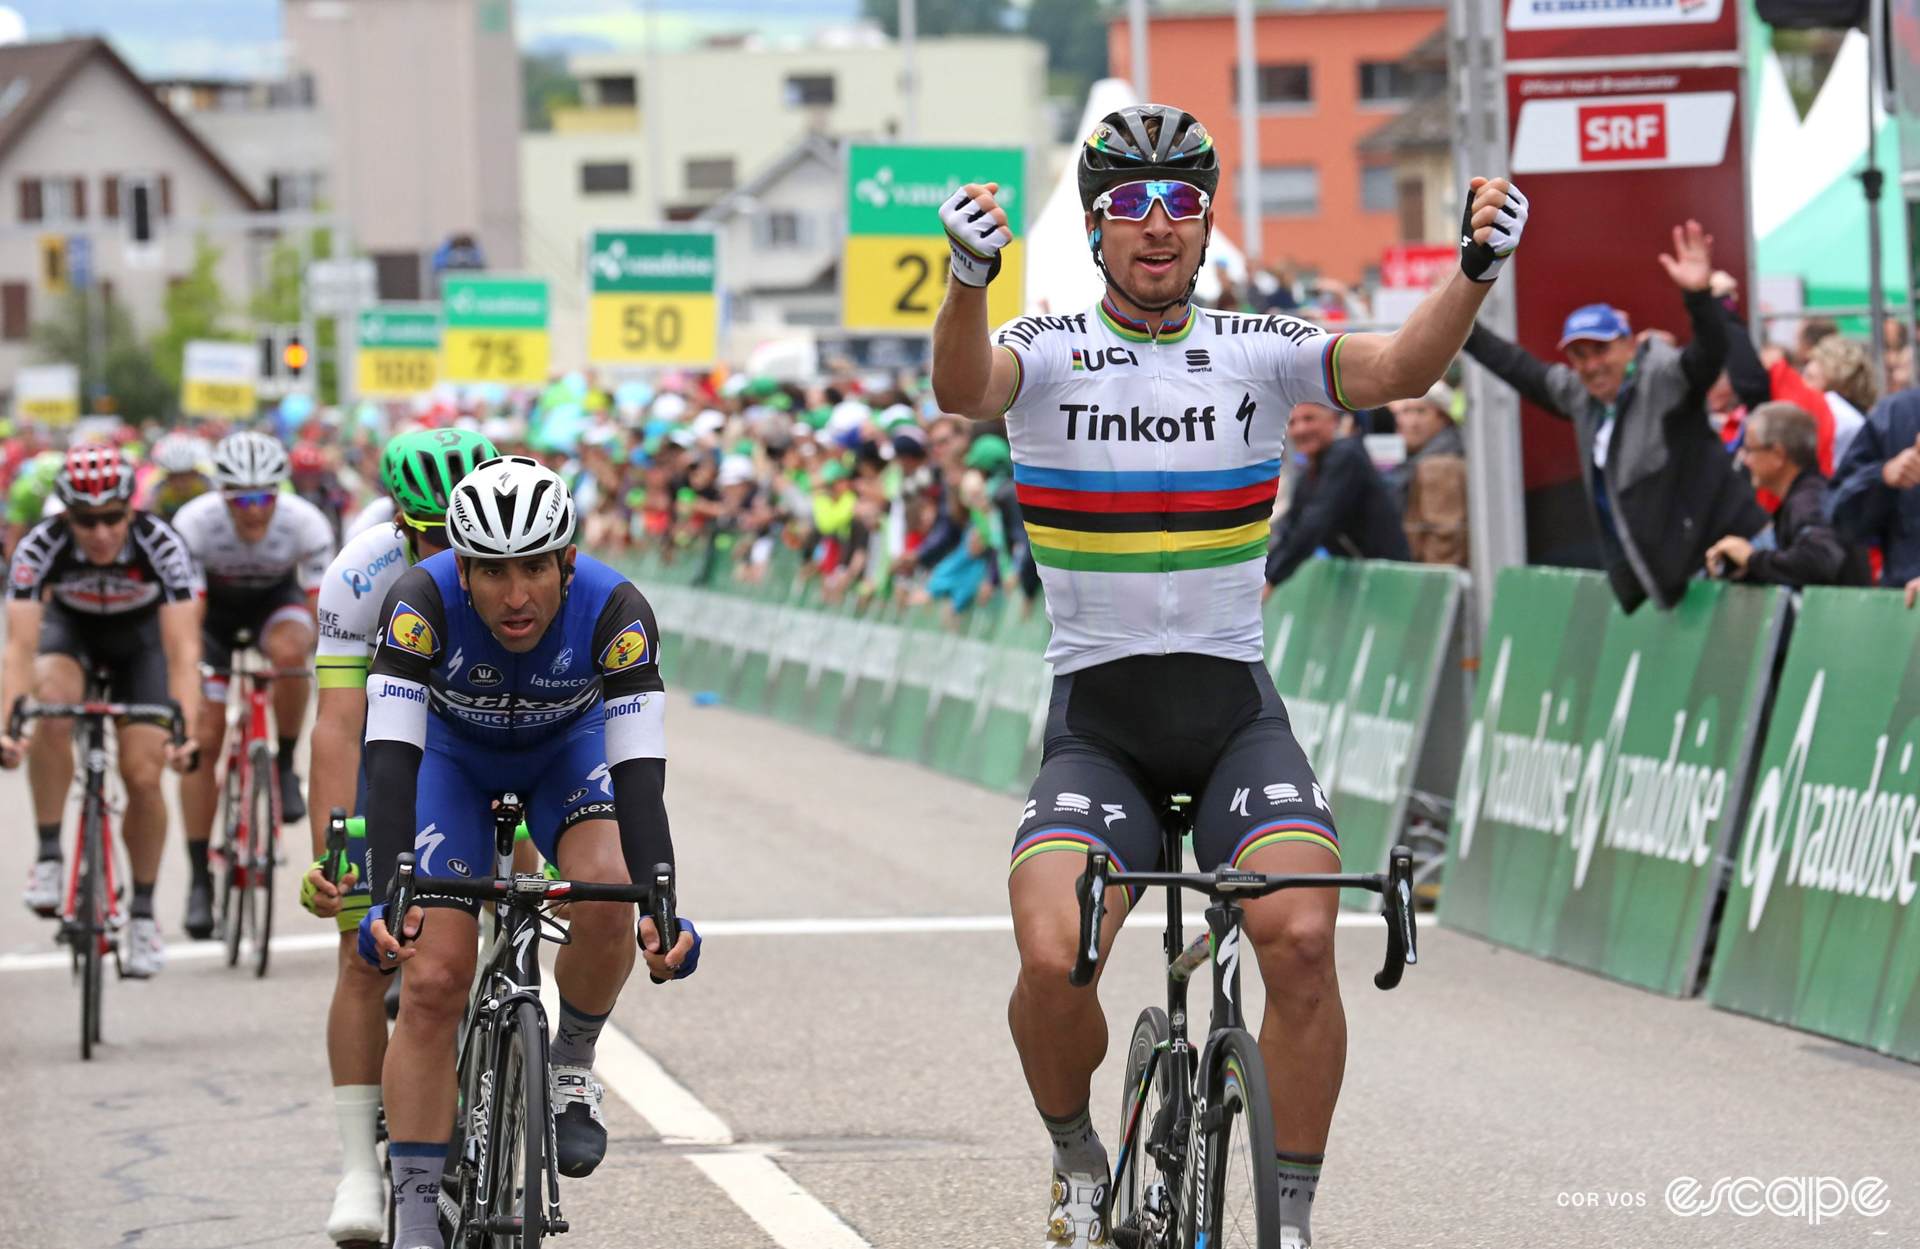 Peter Sagan celebrates winning a stage at the 2016 Tour de Suisse.